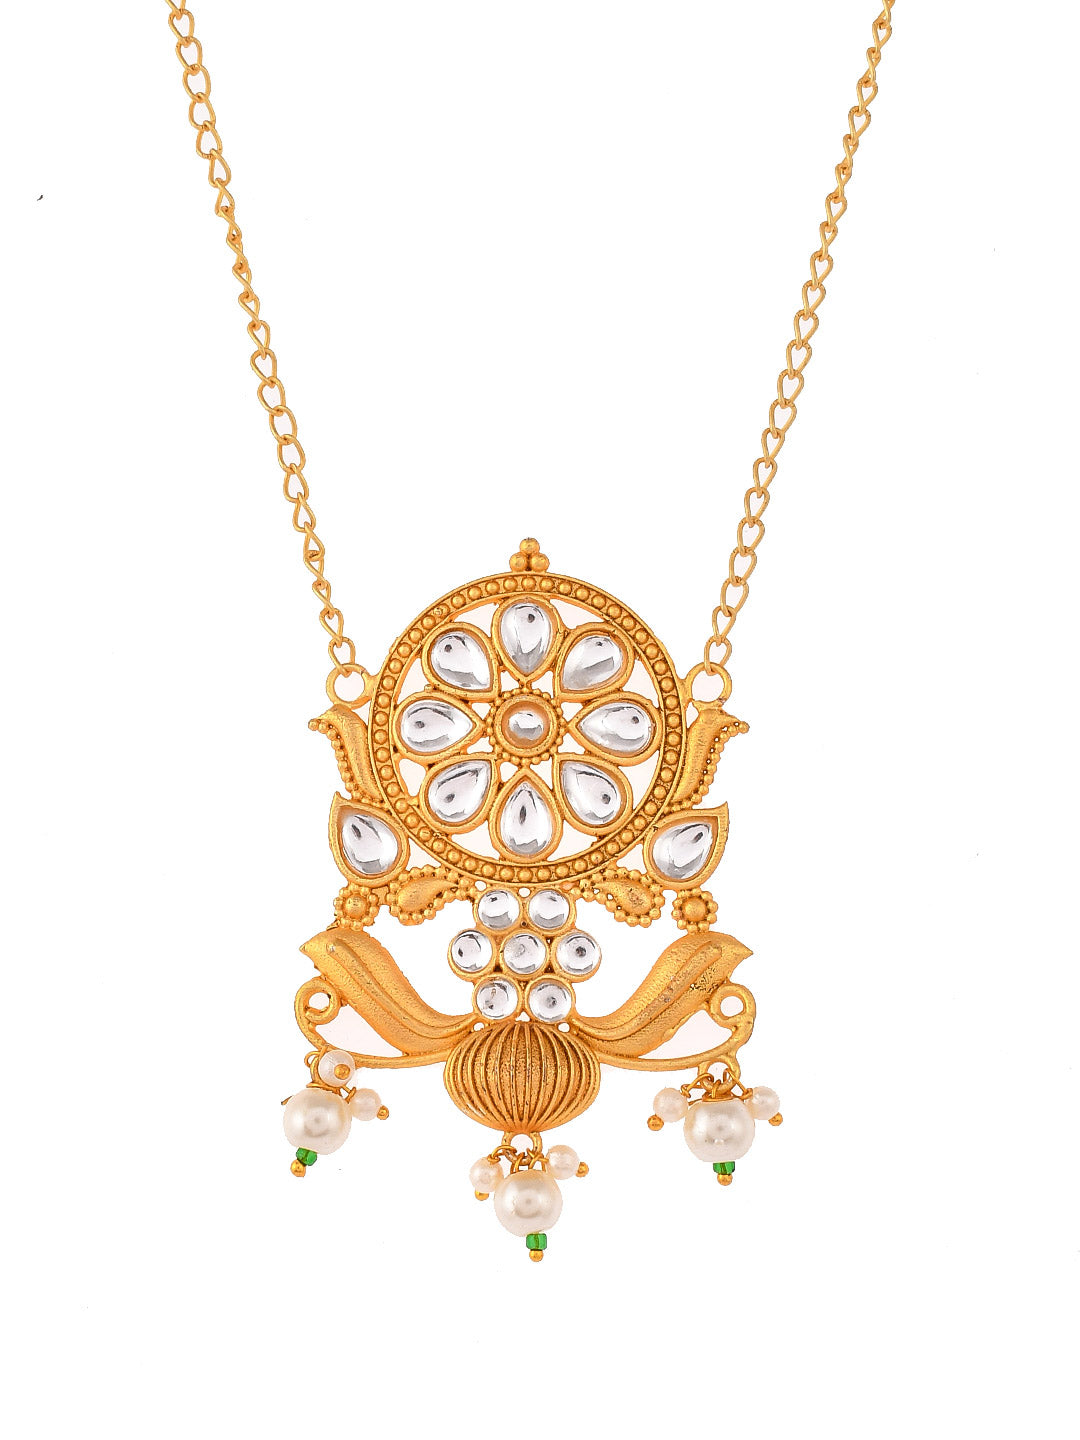 Ethnic Kundan Handcrafted Pendant Chain Necklace